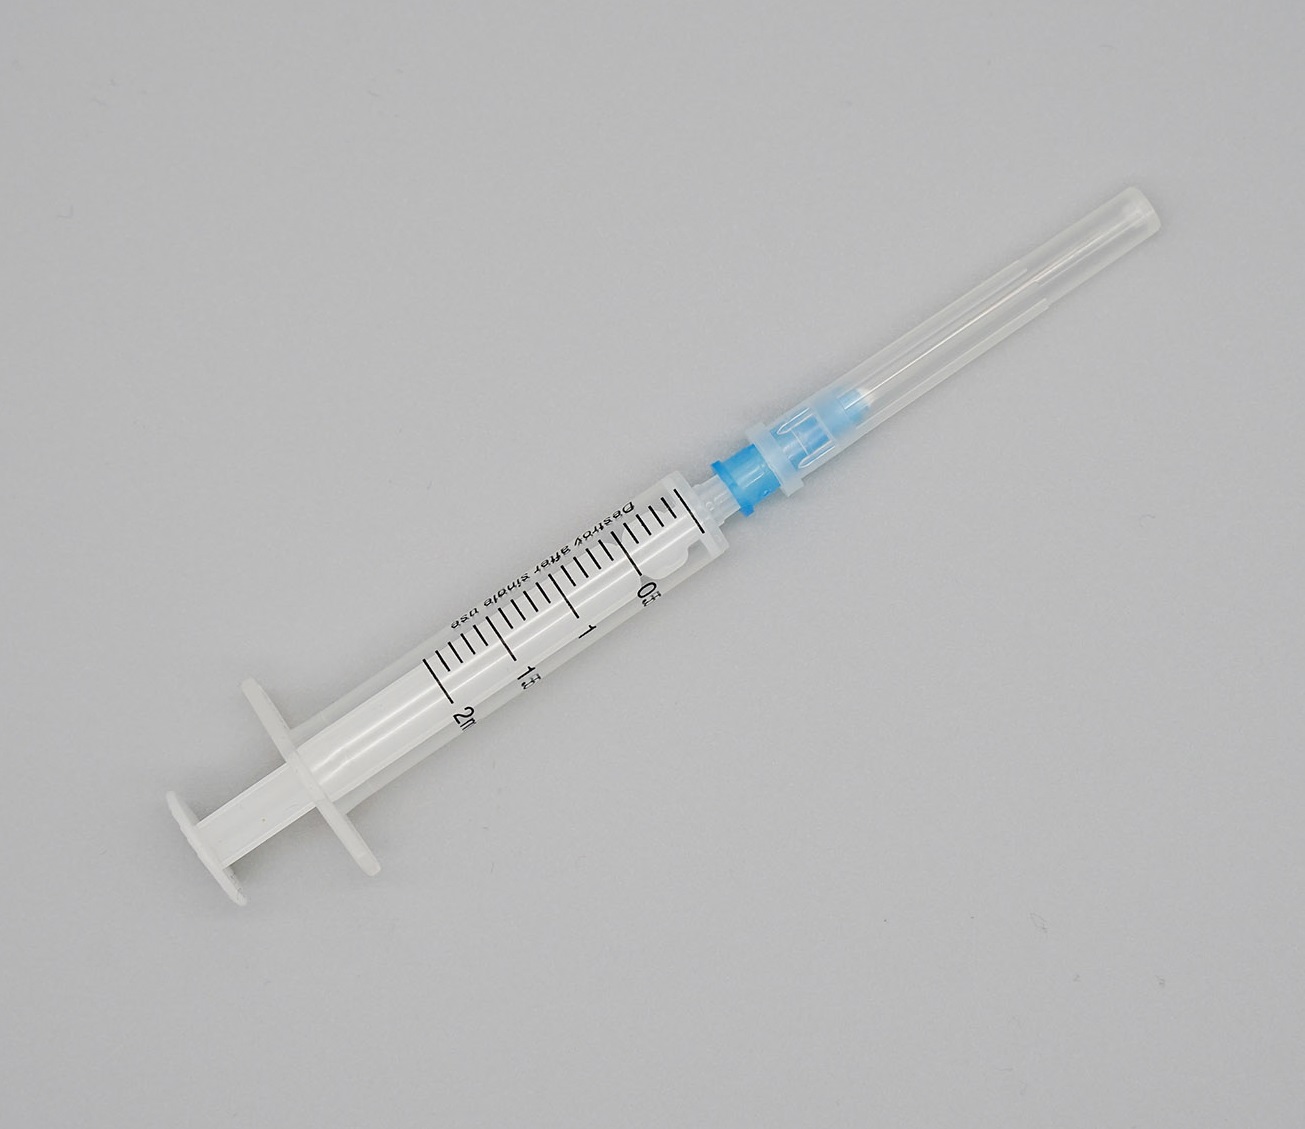 'Disposable Syringes', 'insuline Syringes', 'iv infusion sets', 'Syringes'